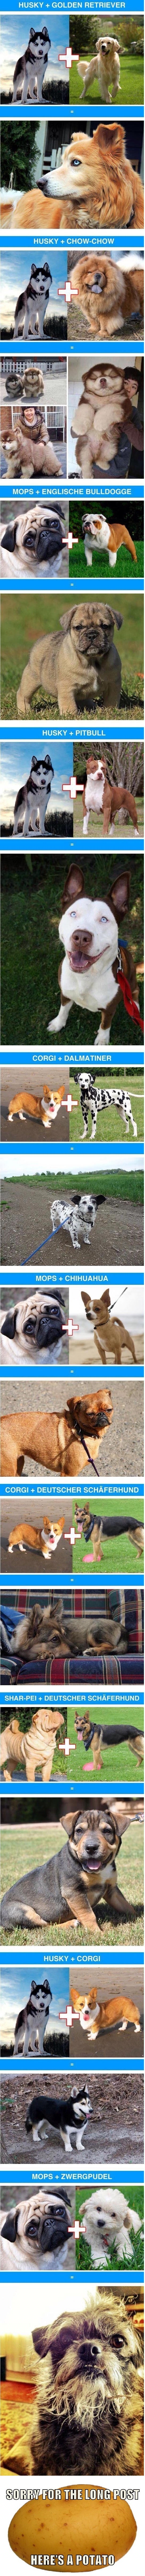 Awesome dog cross-breeds